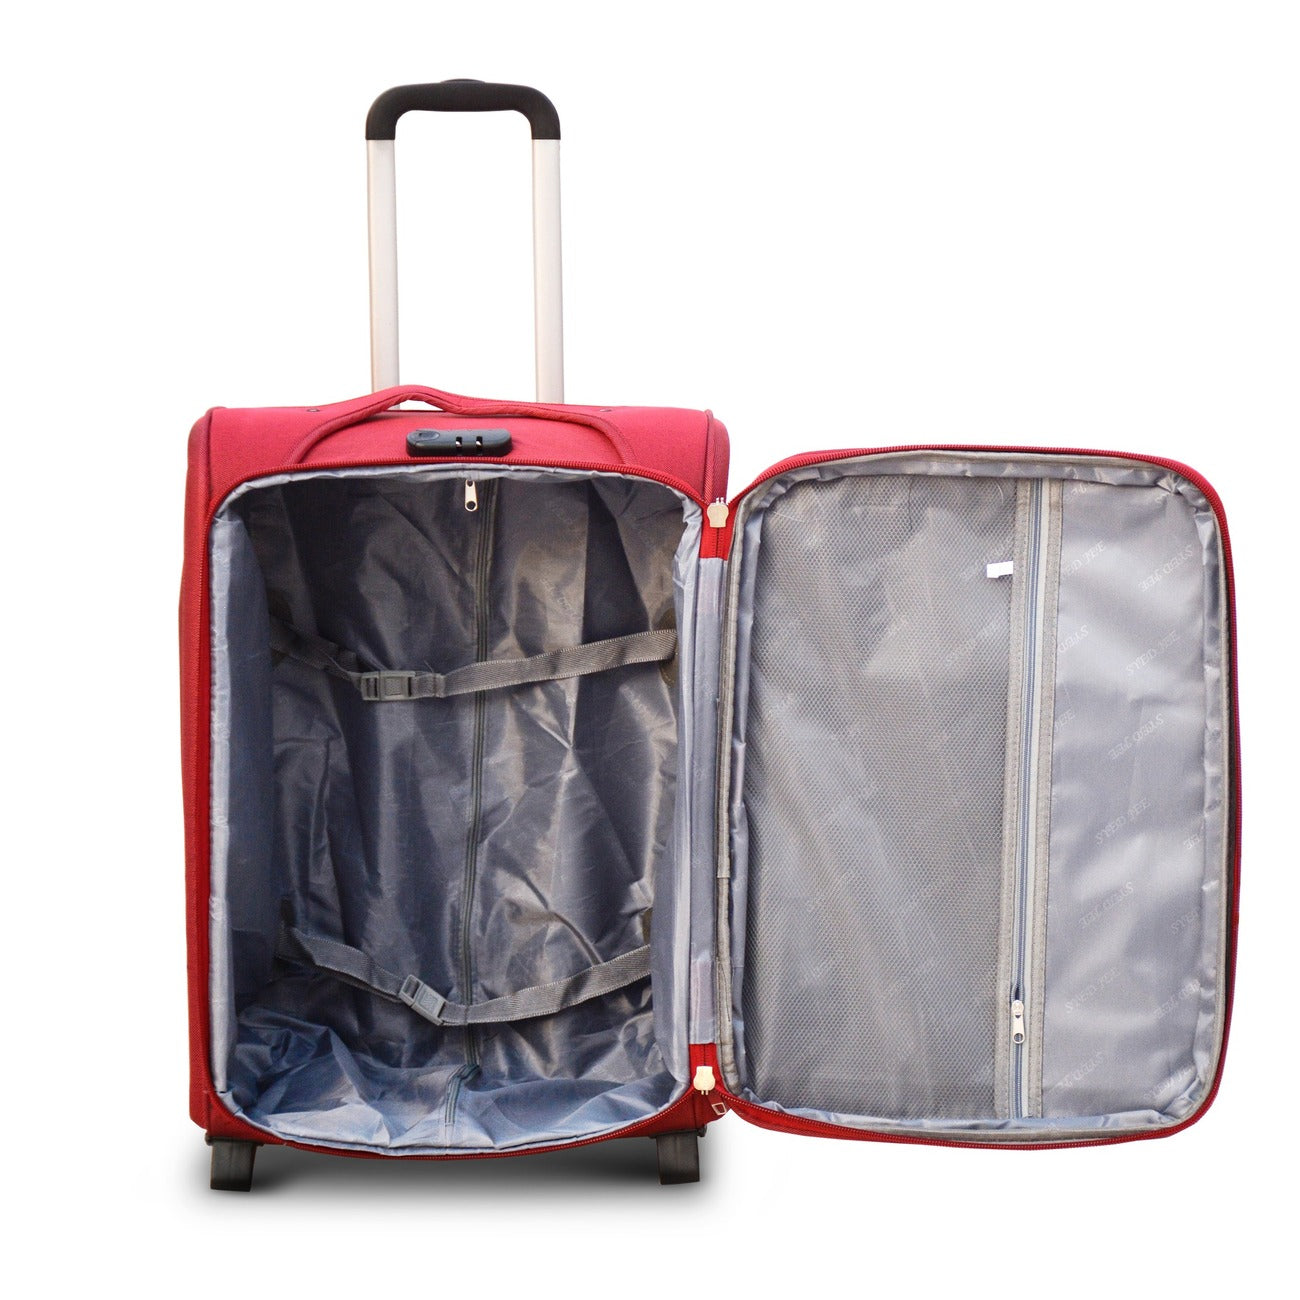 32" Red Colour SJ JIAN 2 Wheel Luggage Lightweight Soft Material Trolley Bag